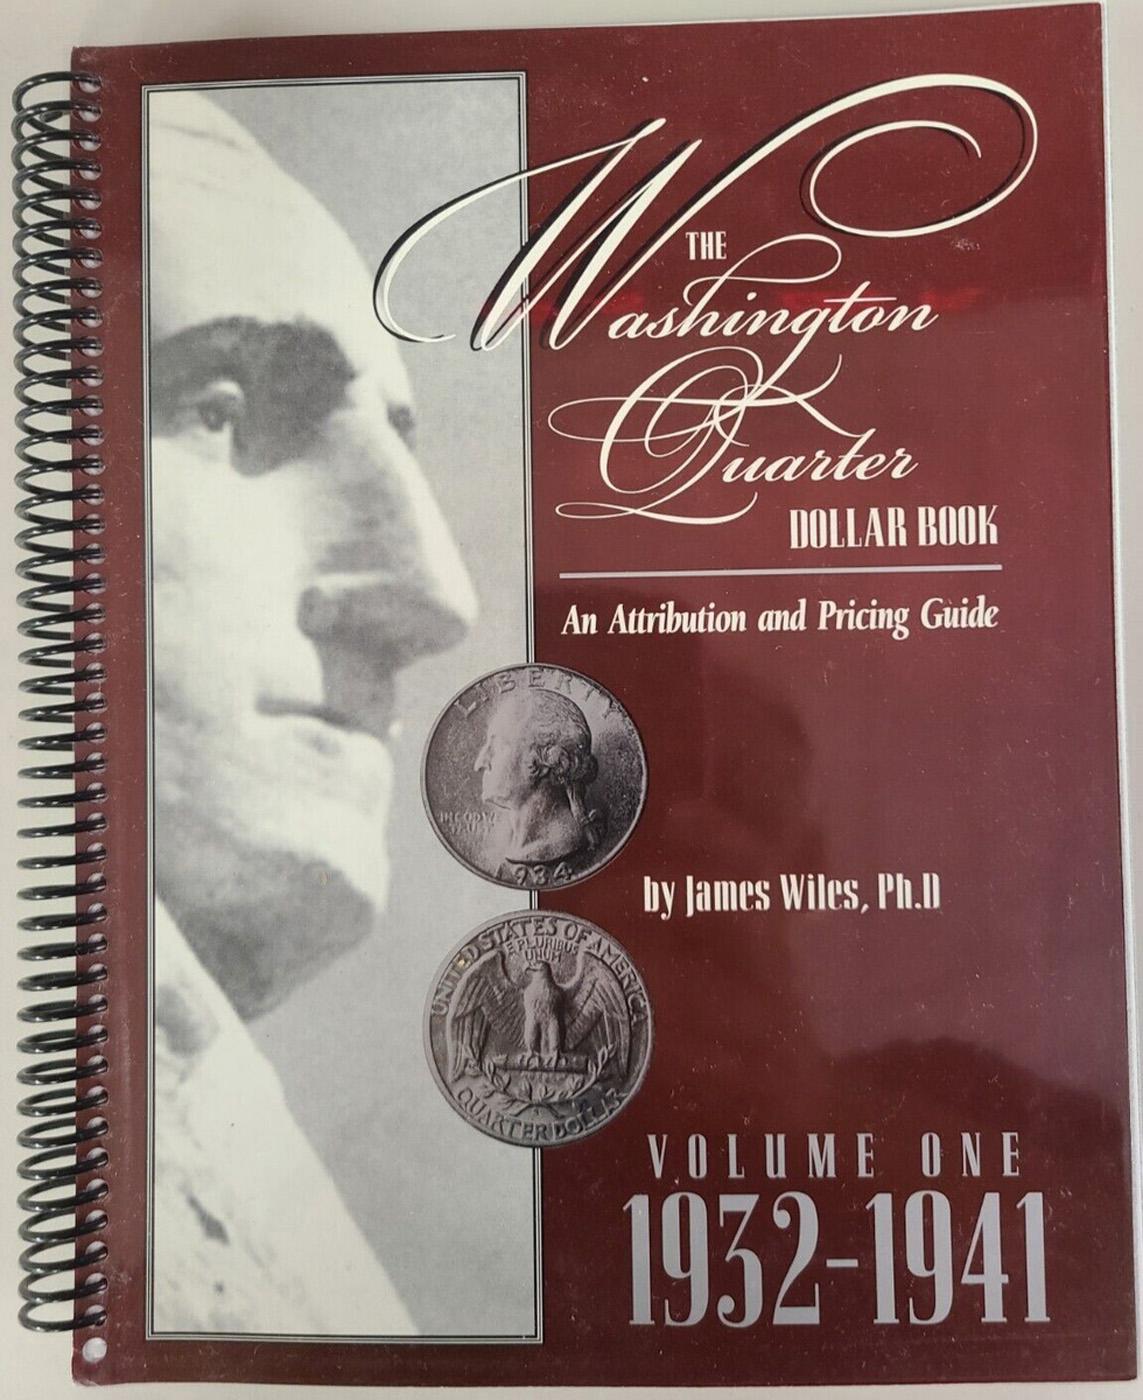 The Washington Quarter Dollar Book Atrribution & Pricing Guide VOLUME 1 1932-1941 By James Wiles